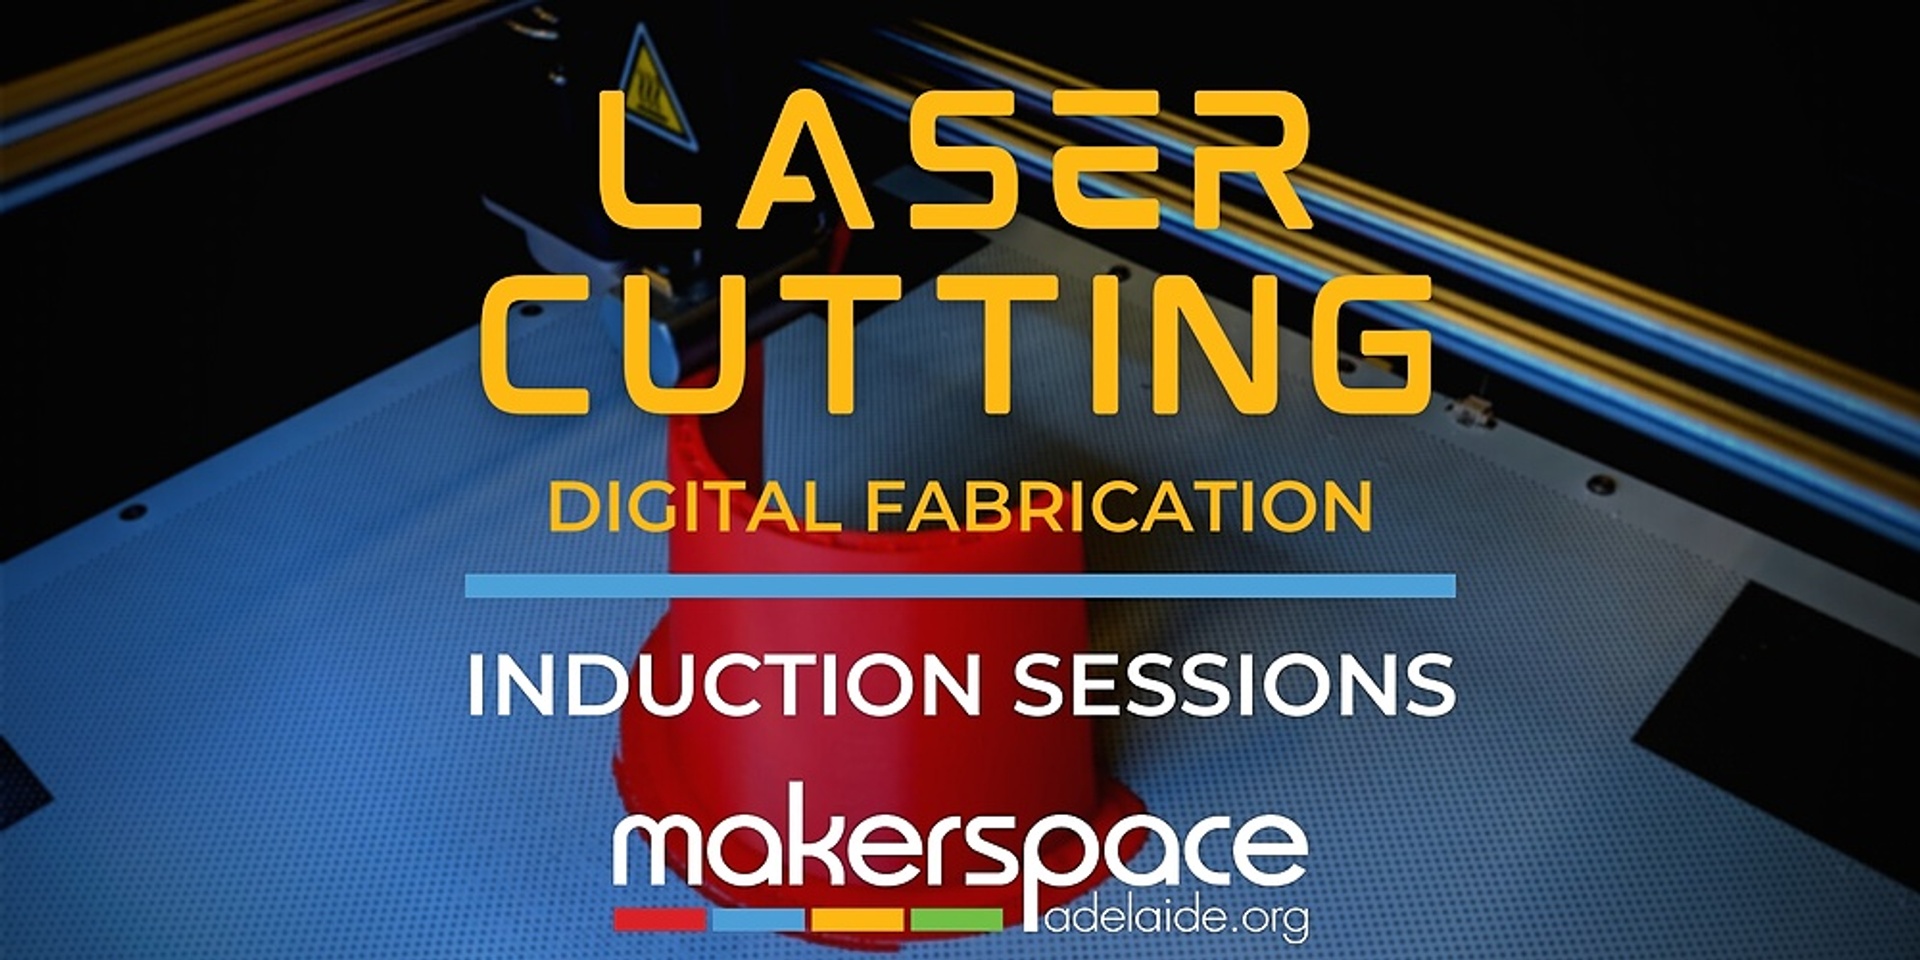 Laser Cutting - Digital Fabrication Induction